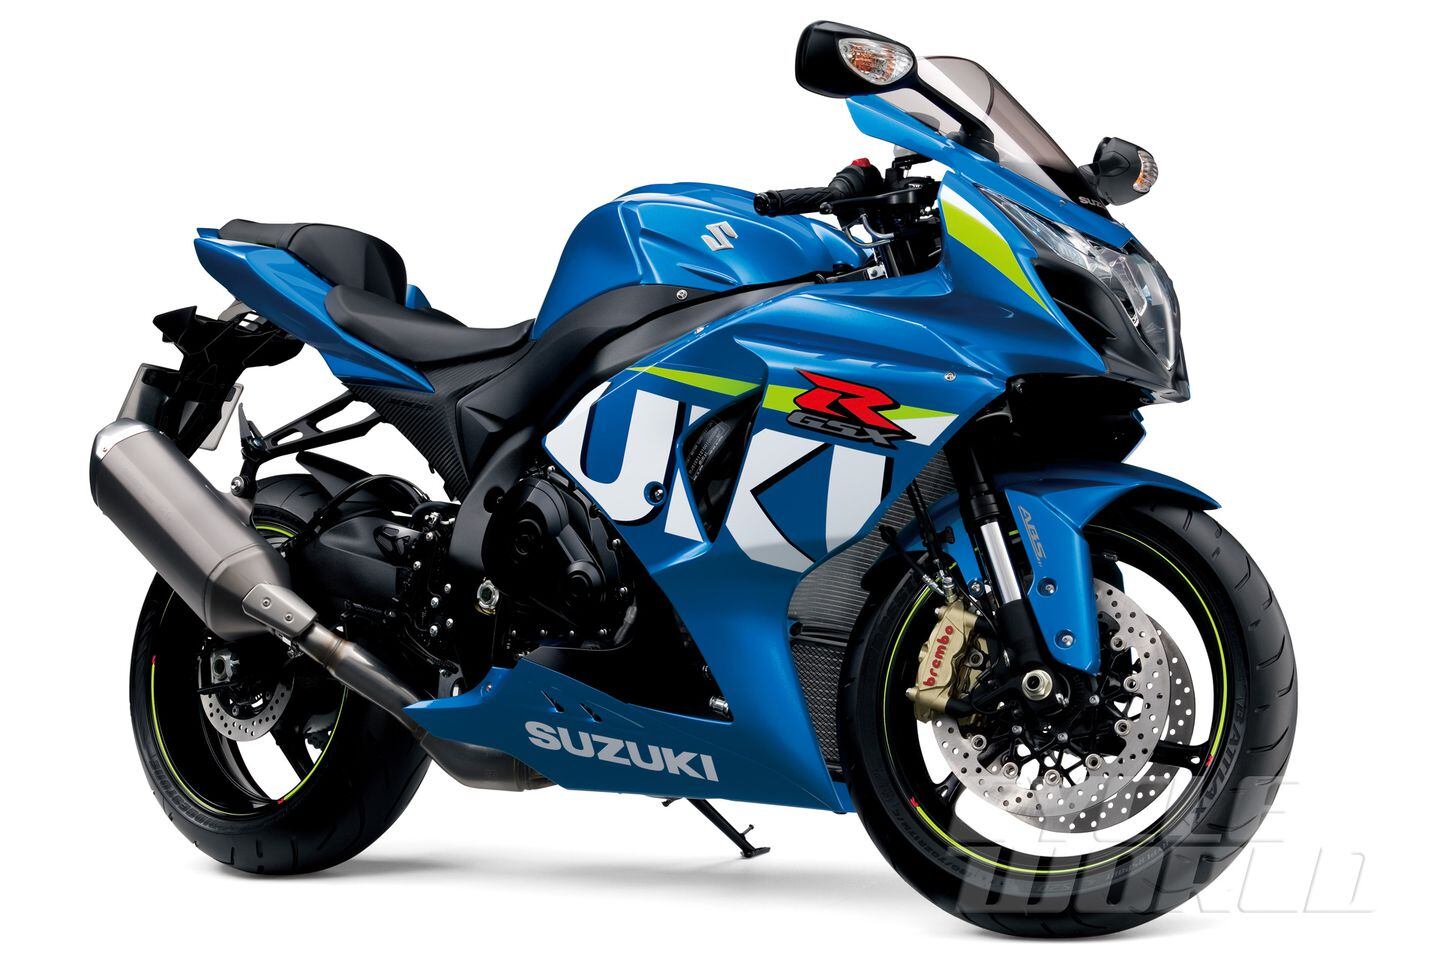 Siete Acuario Medicinal 2015 Suzuki GSX1000s Sportbike Updates Motorcycle Review- INTERMOT 2014 |  Cycle World